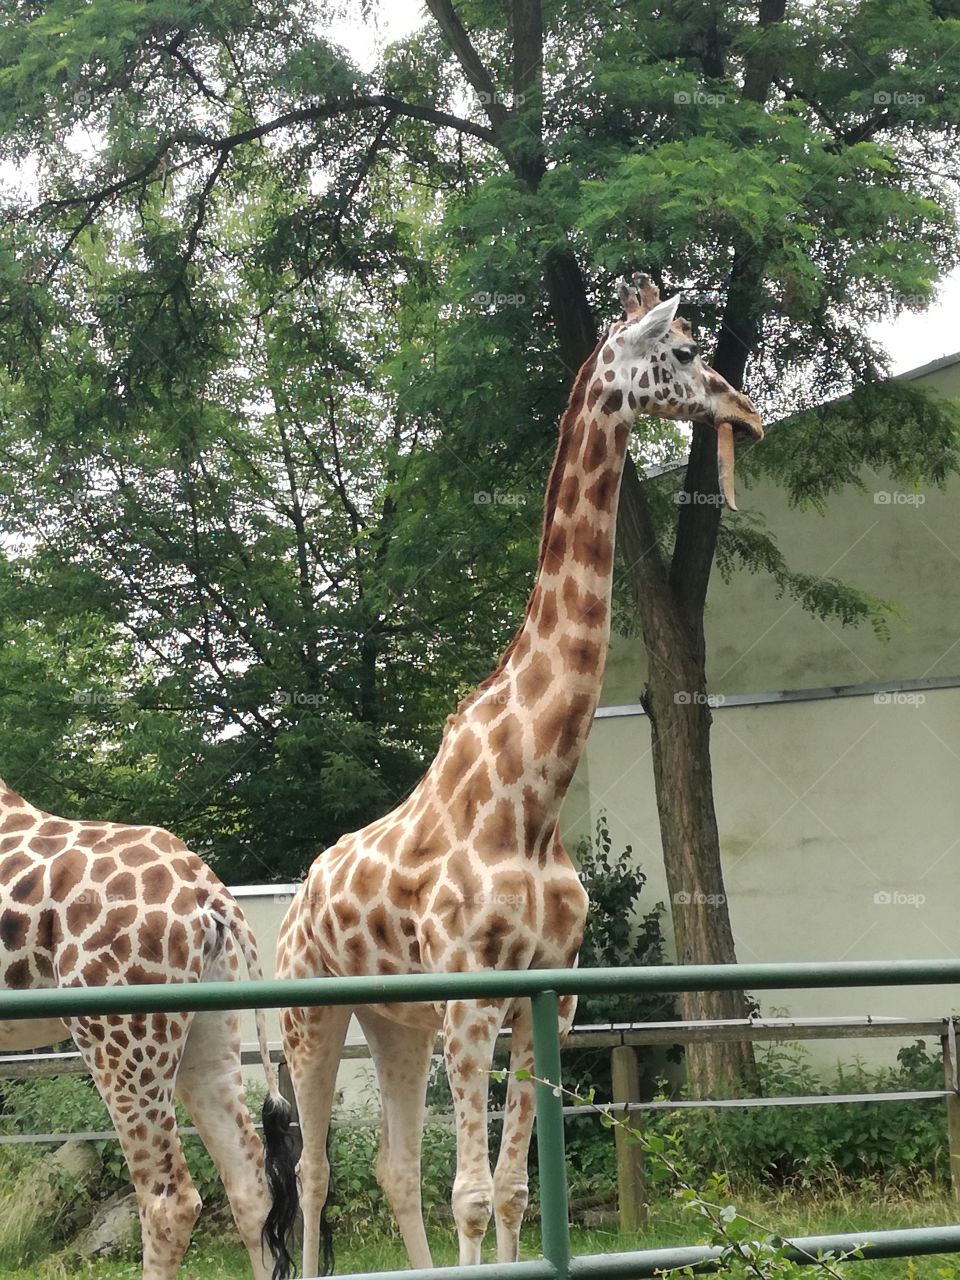 #zoo#lodz#poland#giraffefun